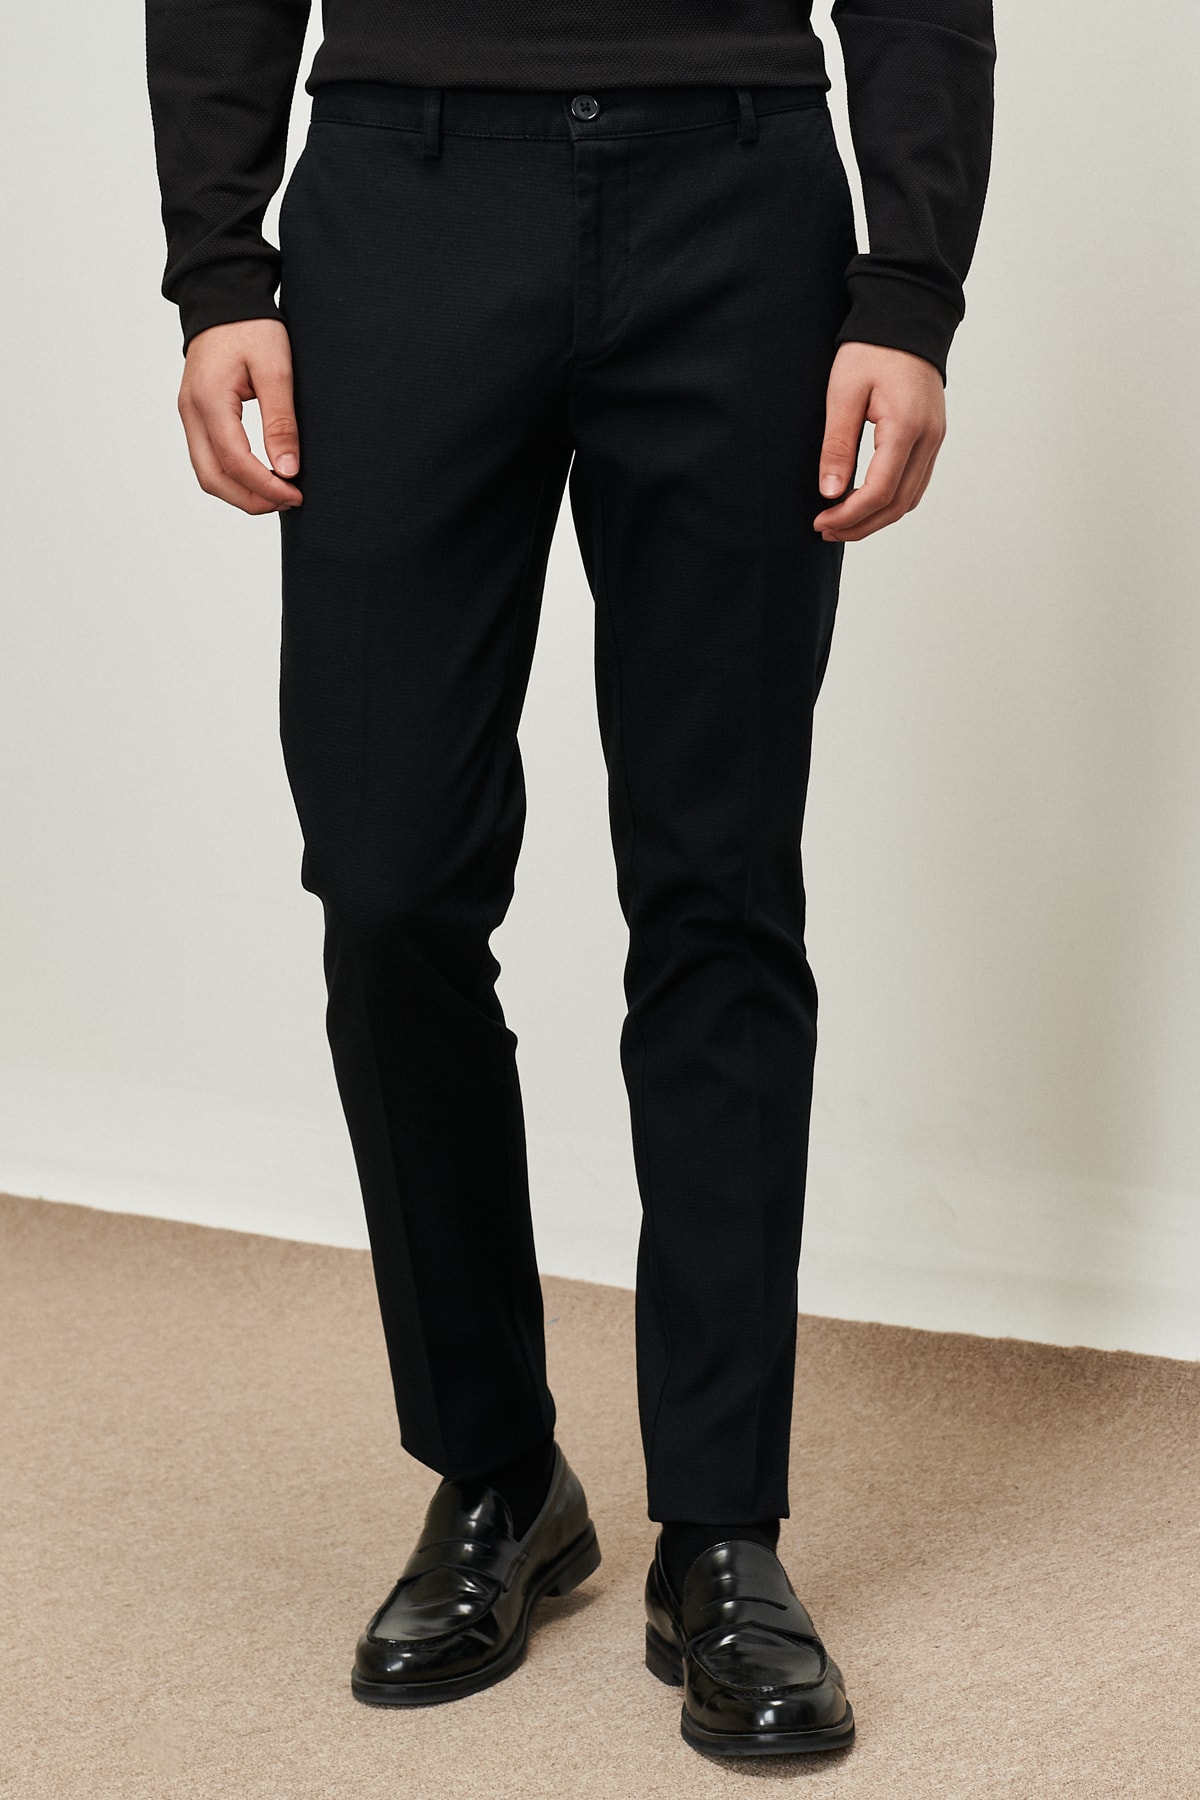 ALTINYILDIZ CLASSICS Men's Black Slim Fit Slim Fit Dobby Flexible Casual Trousers